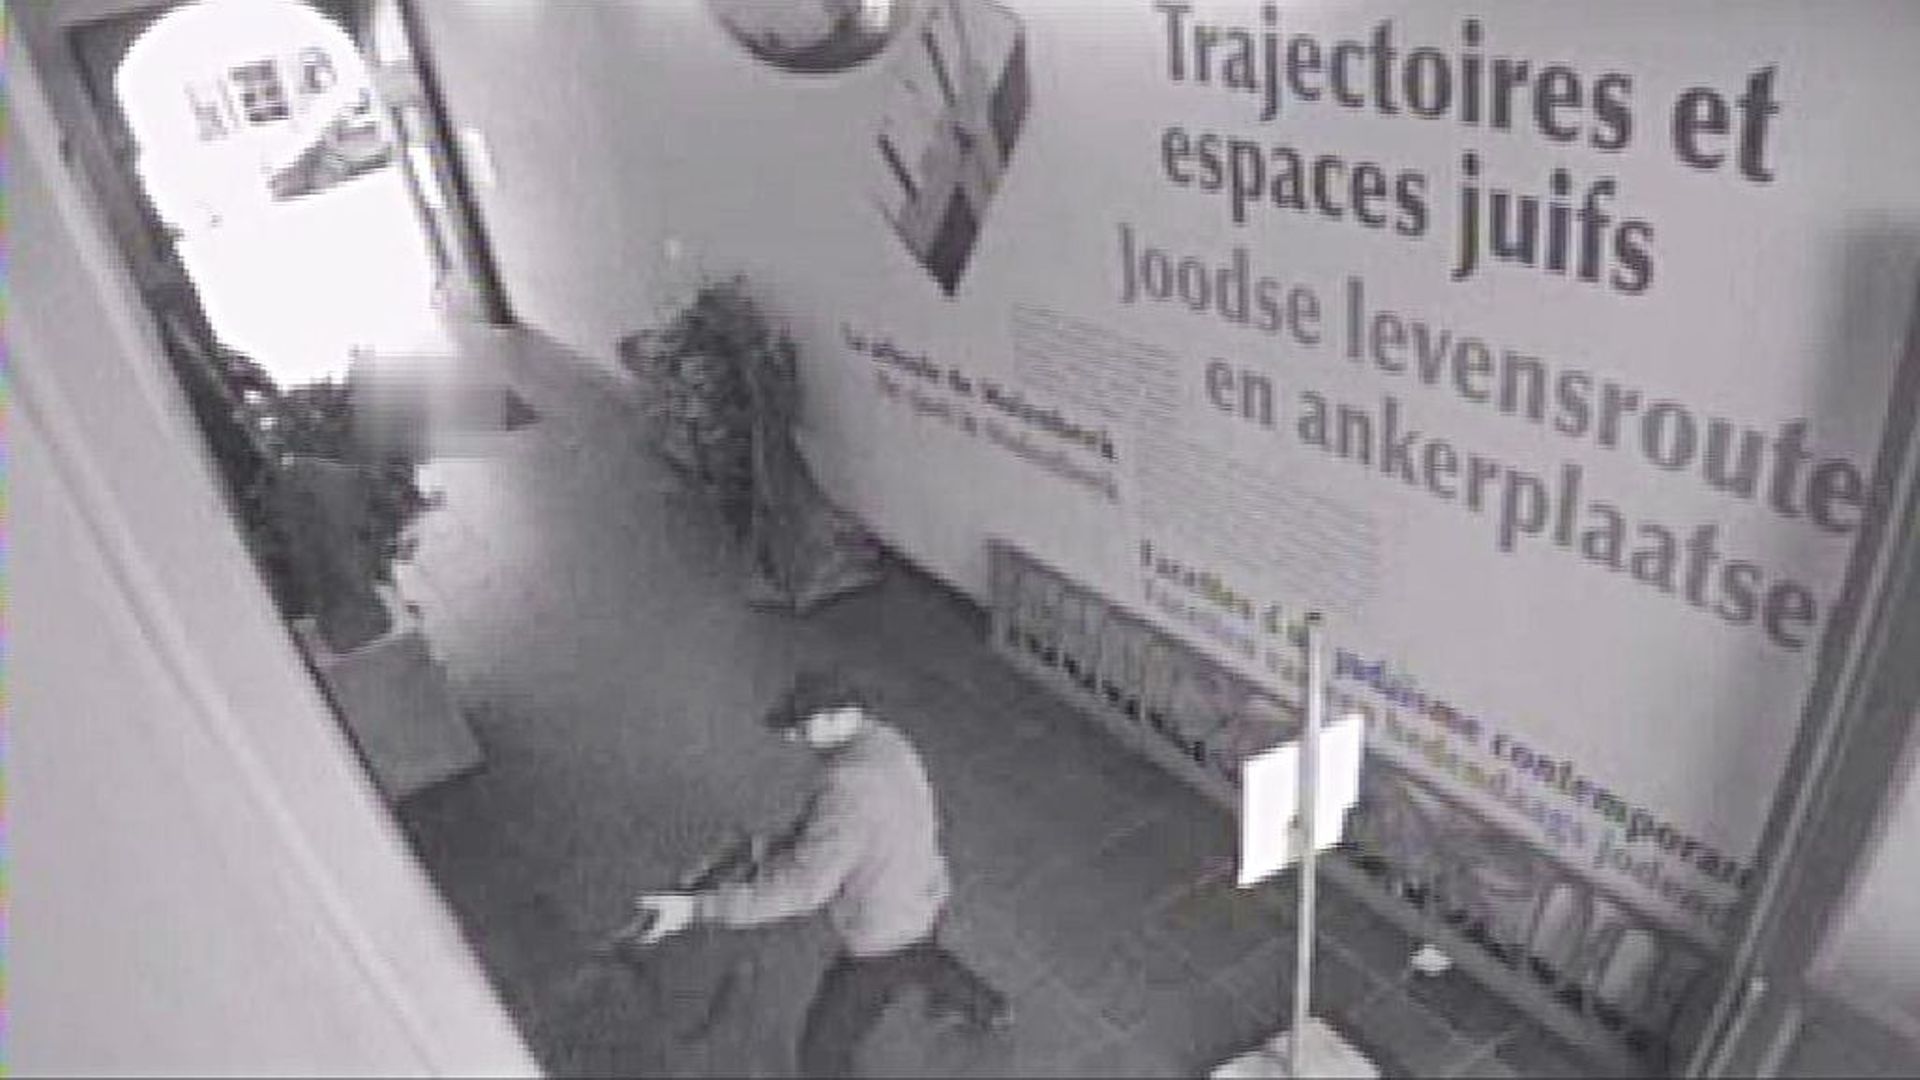 Musée juif: "Triple assassinat et tentative d'assassinat terroristes"